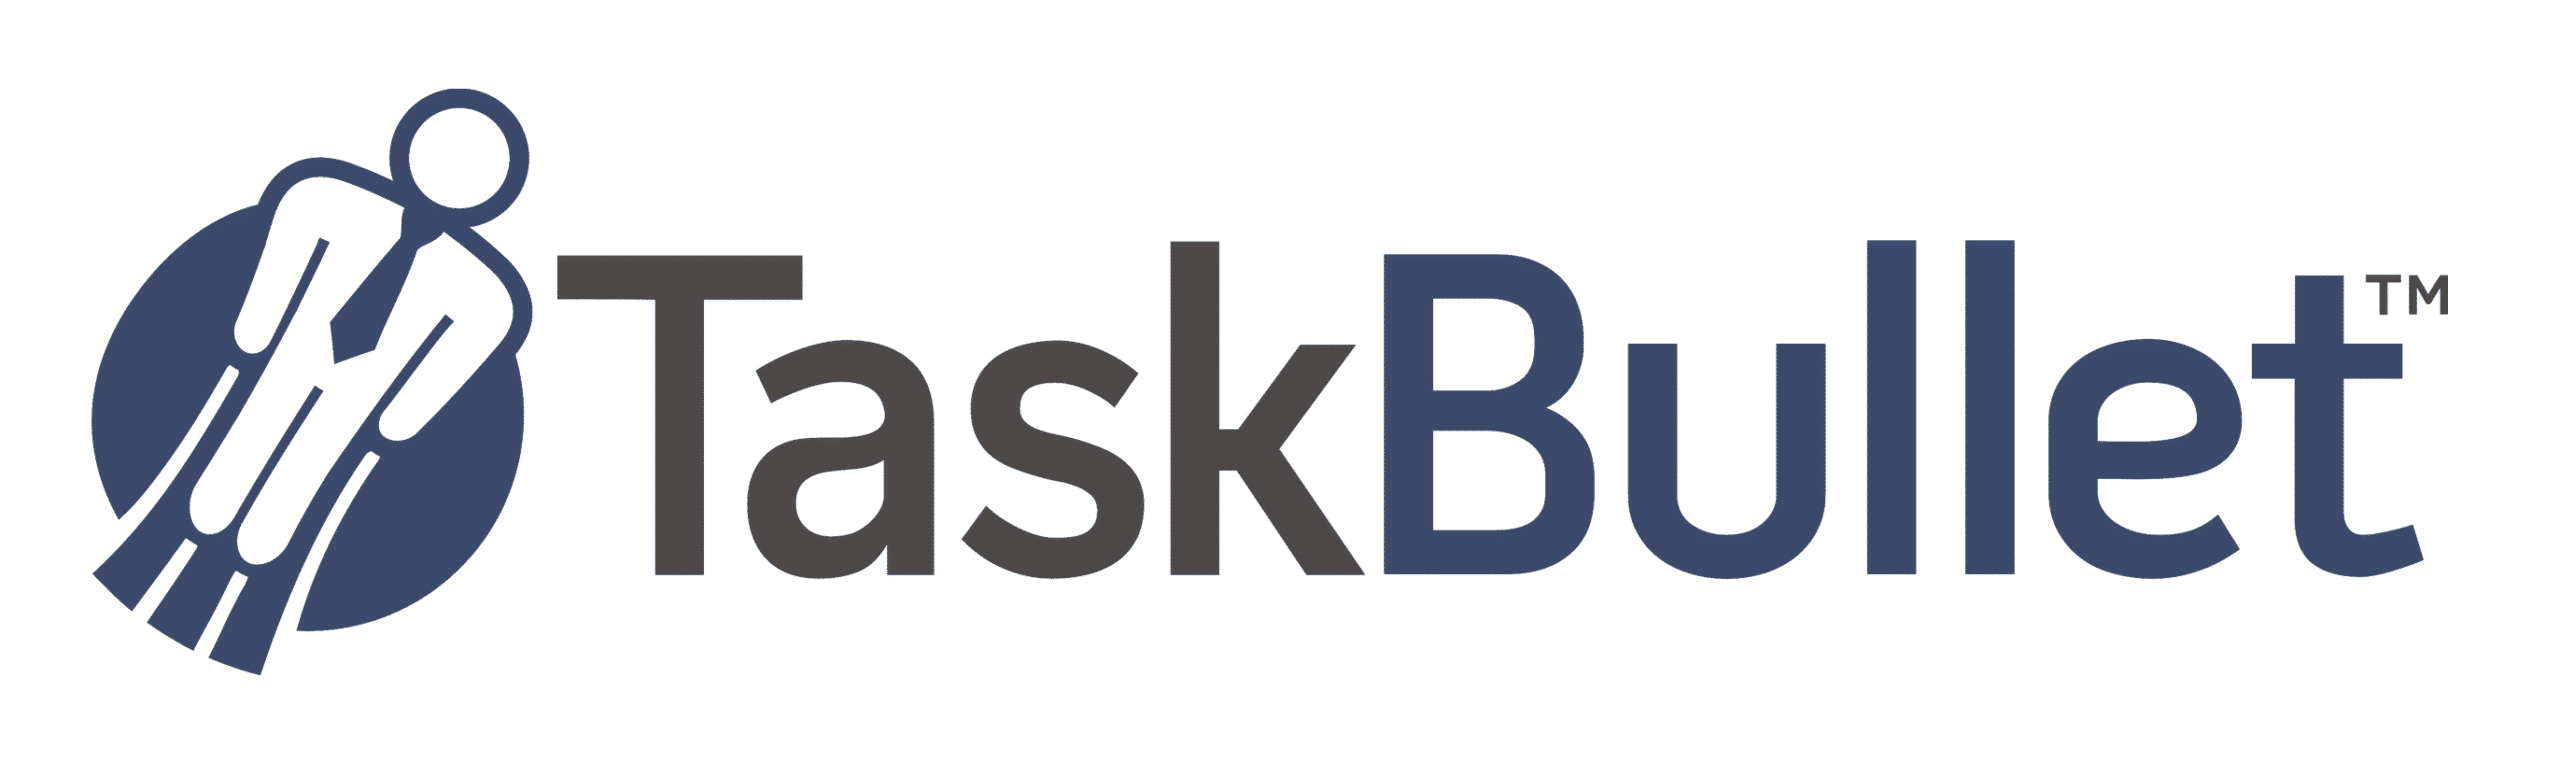 TaskBullet Virtual Assistant Company logo